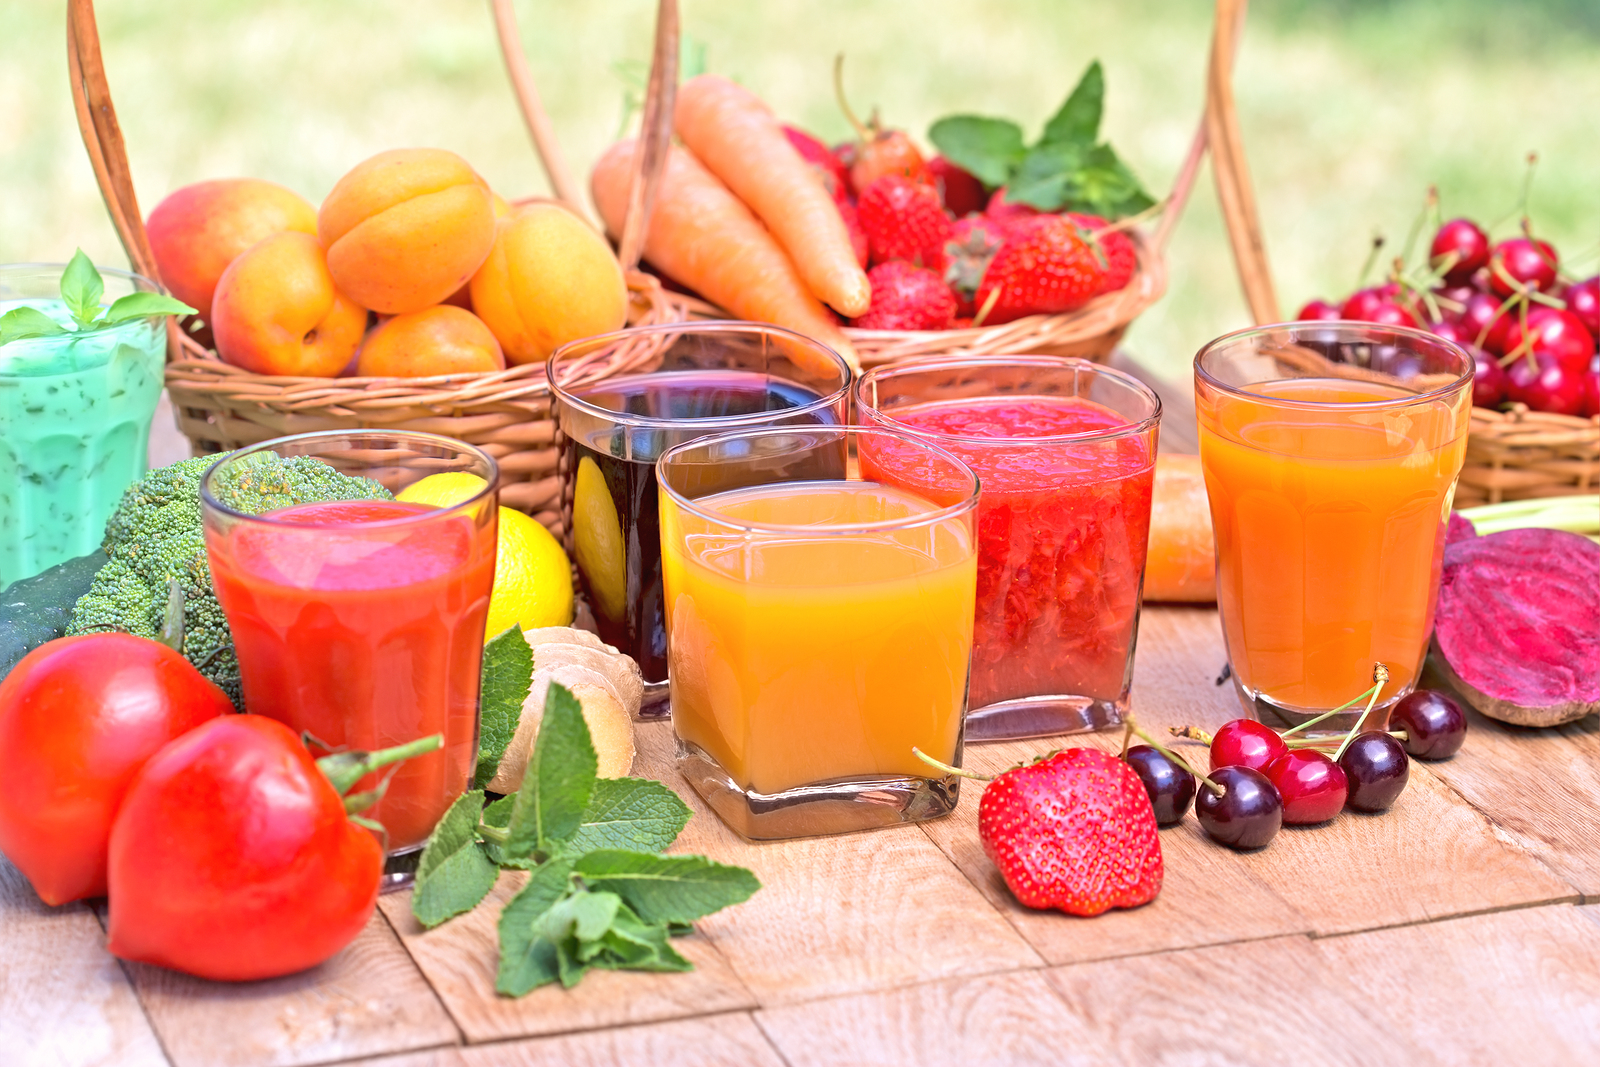 Fruit juice and vegetable juice